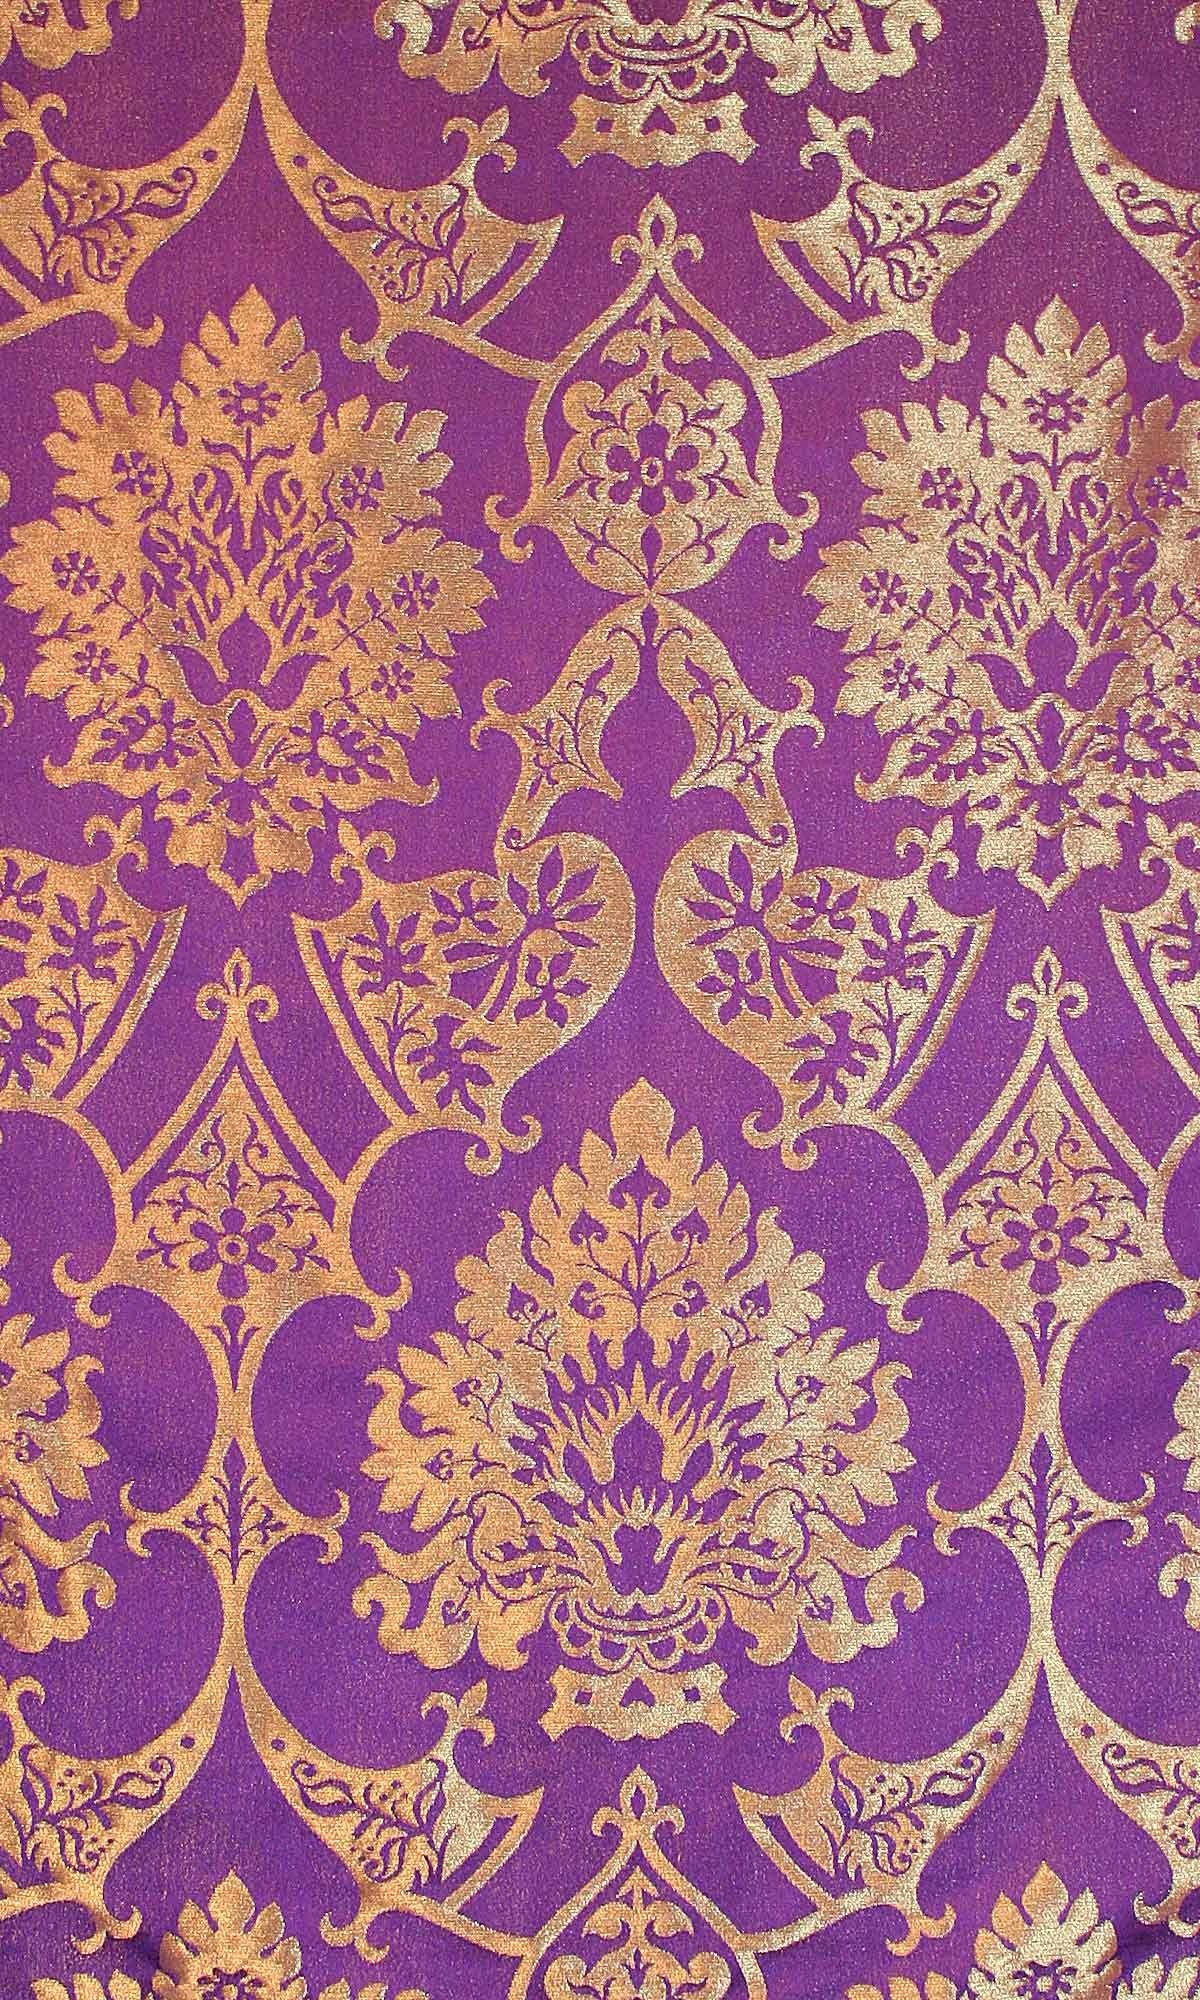 Purple Gold Wallpaper (53+ images)